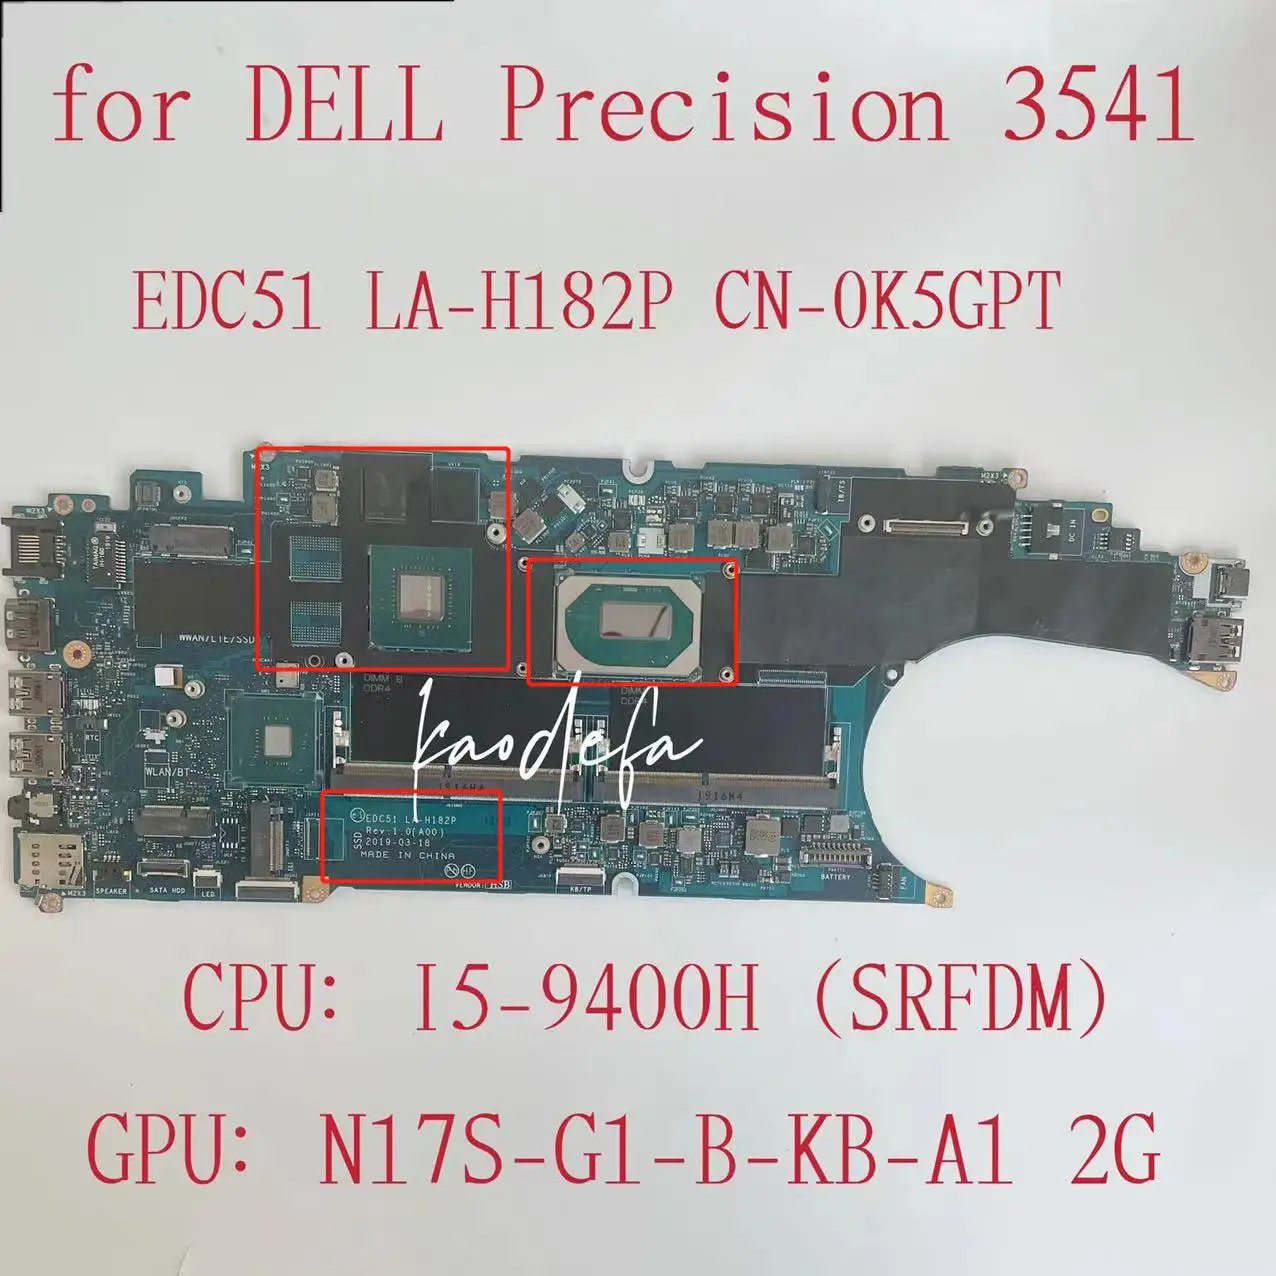 EDC51 LA-H182P placa-mãe Para Dell Precision 3541 Laptop placa-Mãe CPU:I5-9400H GPU:N17s-G1-B-KB-A1 2G CN-0K5GPT 0K5GPT K5GPT